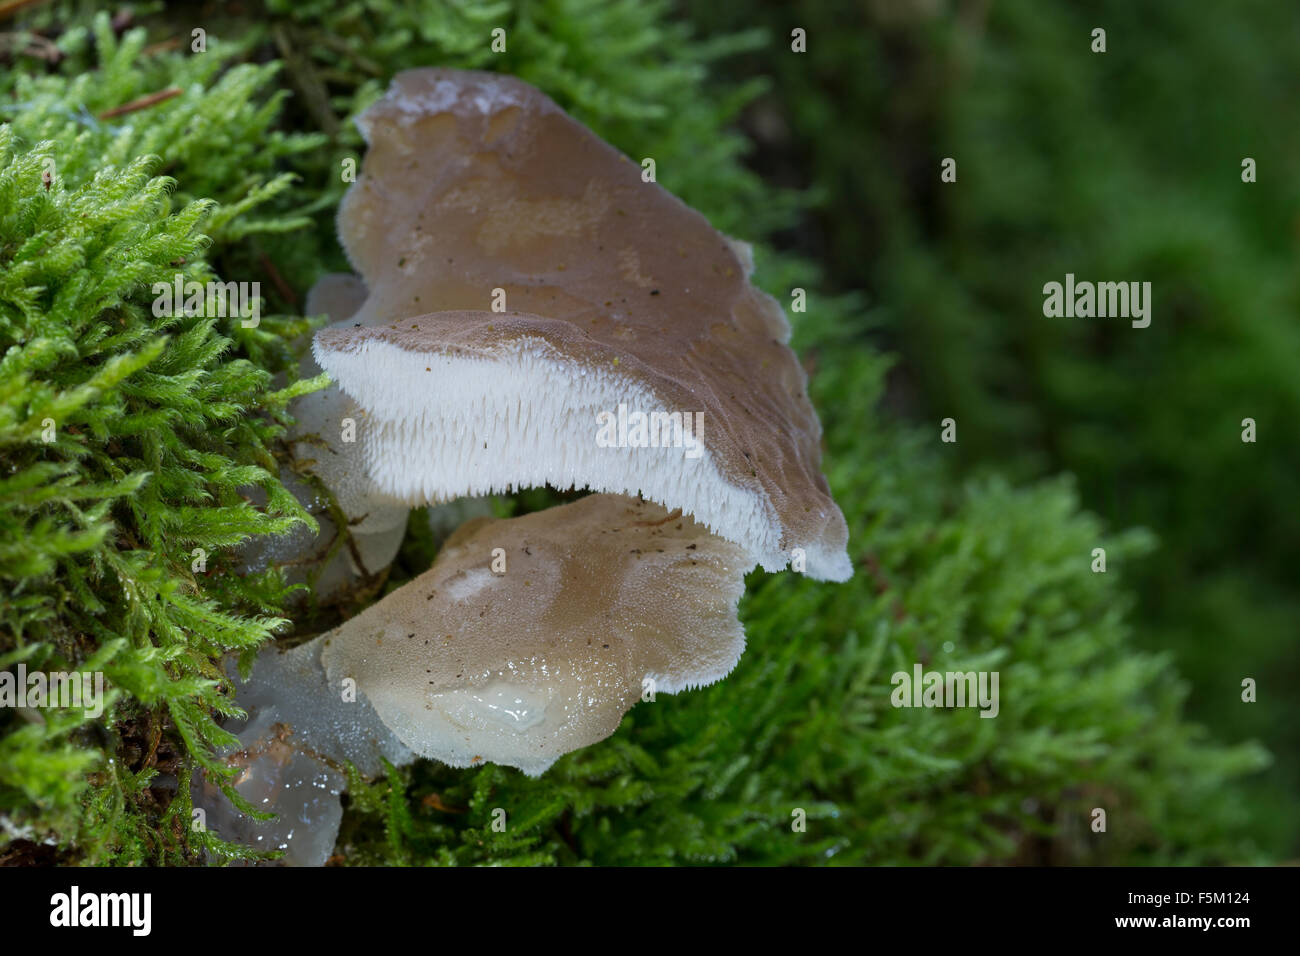 Toothed jelly fungus, false hedgehog mushroom, Gallertiger Zitterzahn, Eispilz, Eiszitterpilz, Pseudohydnum gelatinosum Stock Photo